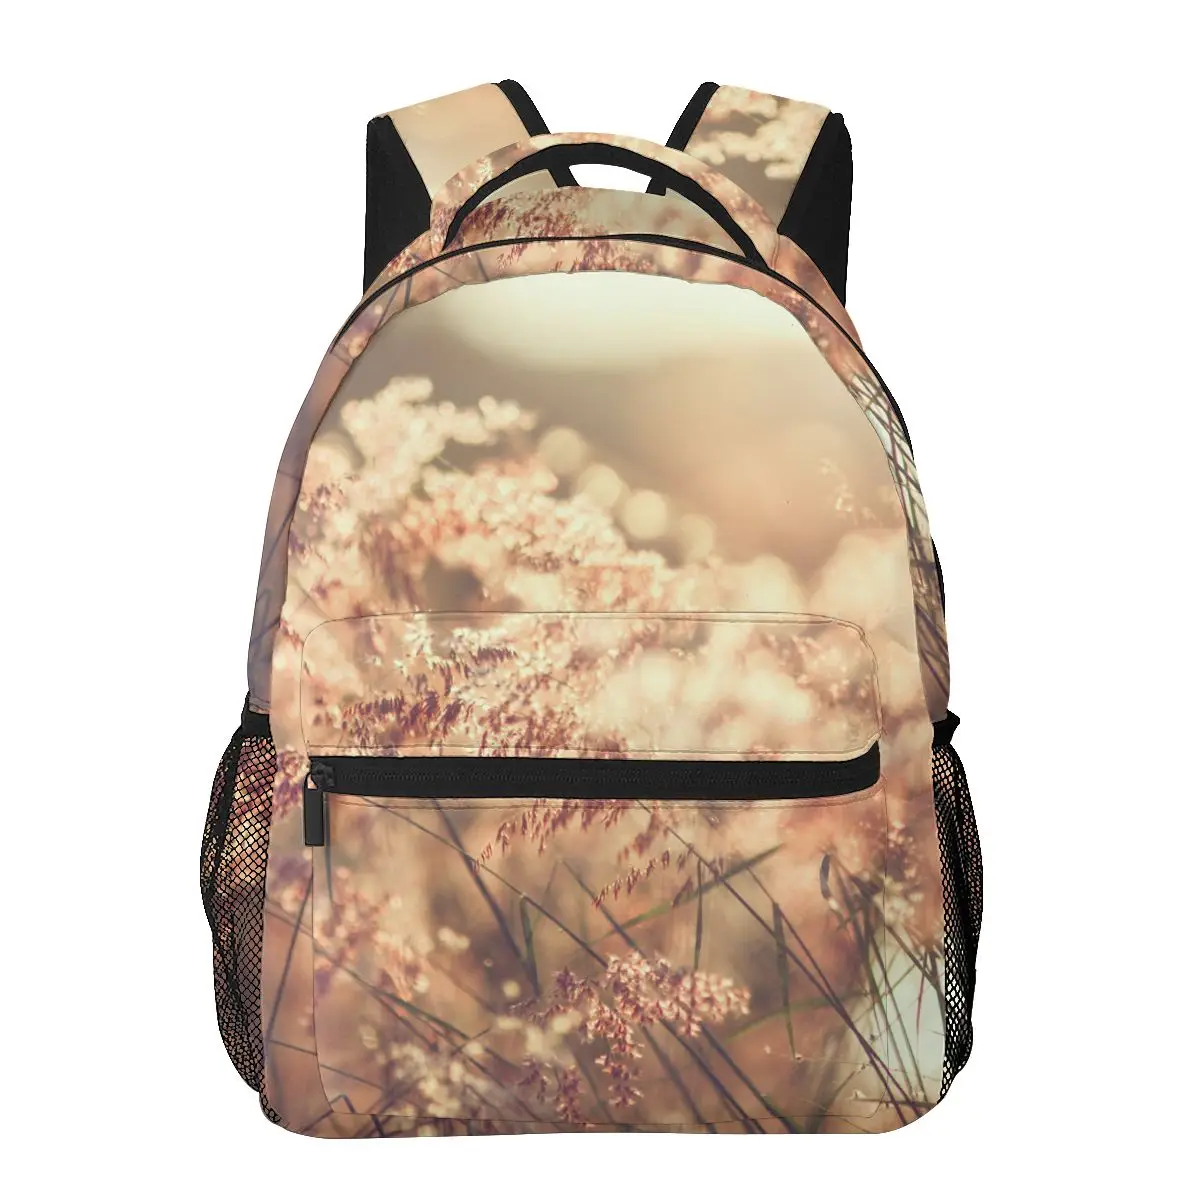 

Female Backpack Vintage Flowers Grass Blurred Women Backpack College School Bagpack Travel Shoulder Bags For Teenage Girls